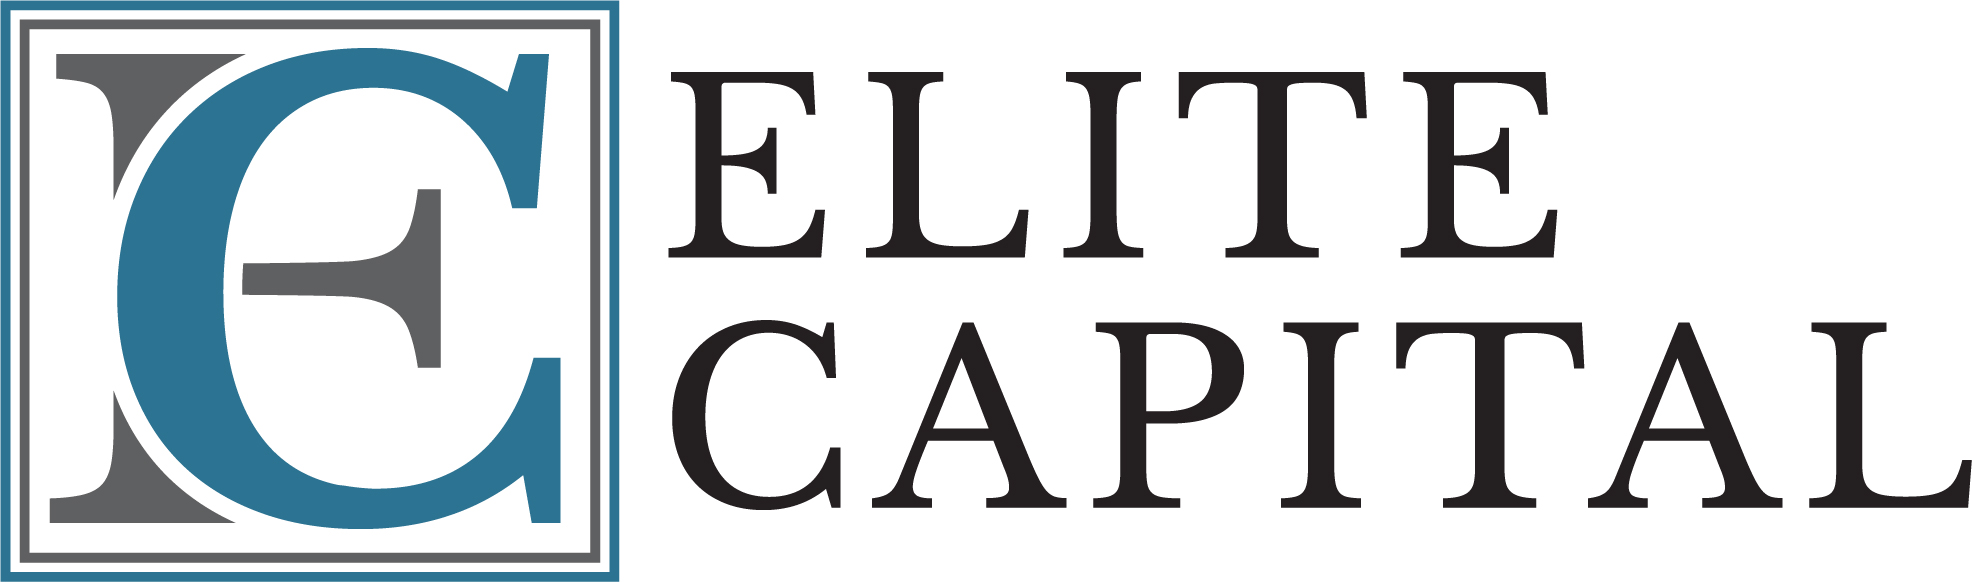 23_elite capital logo